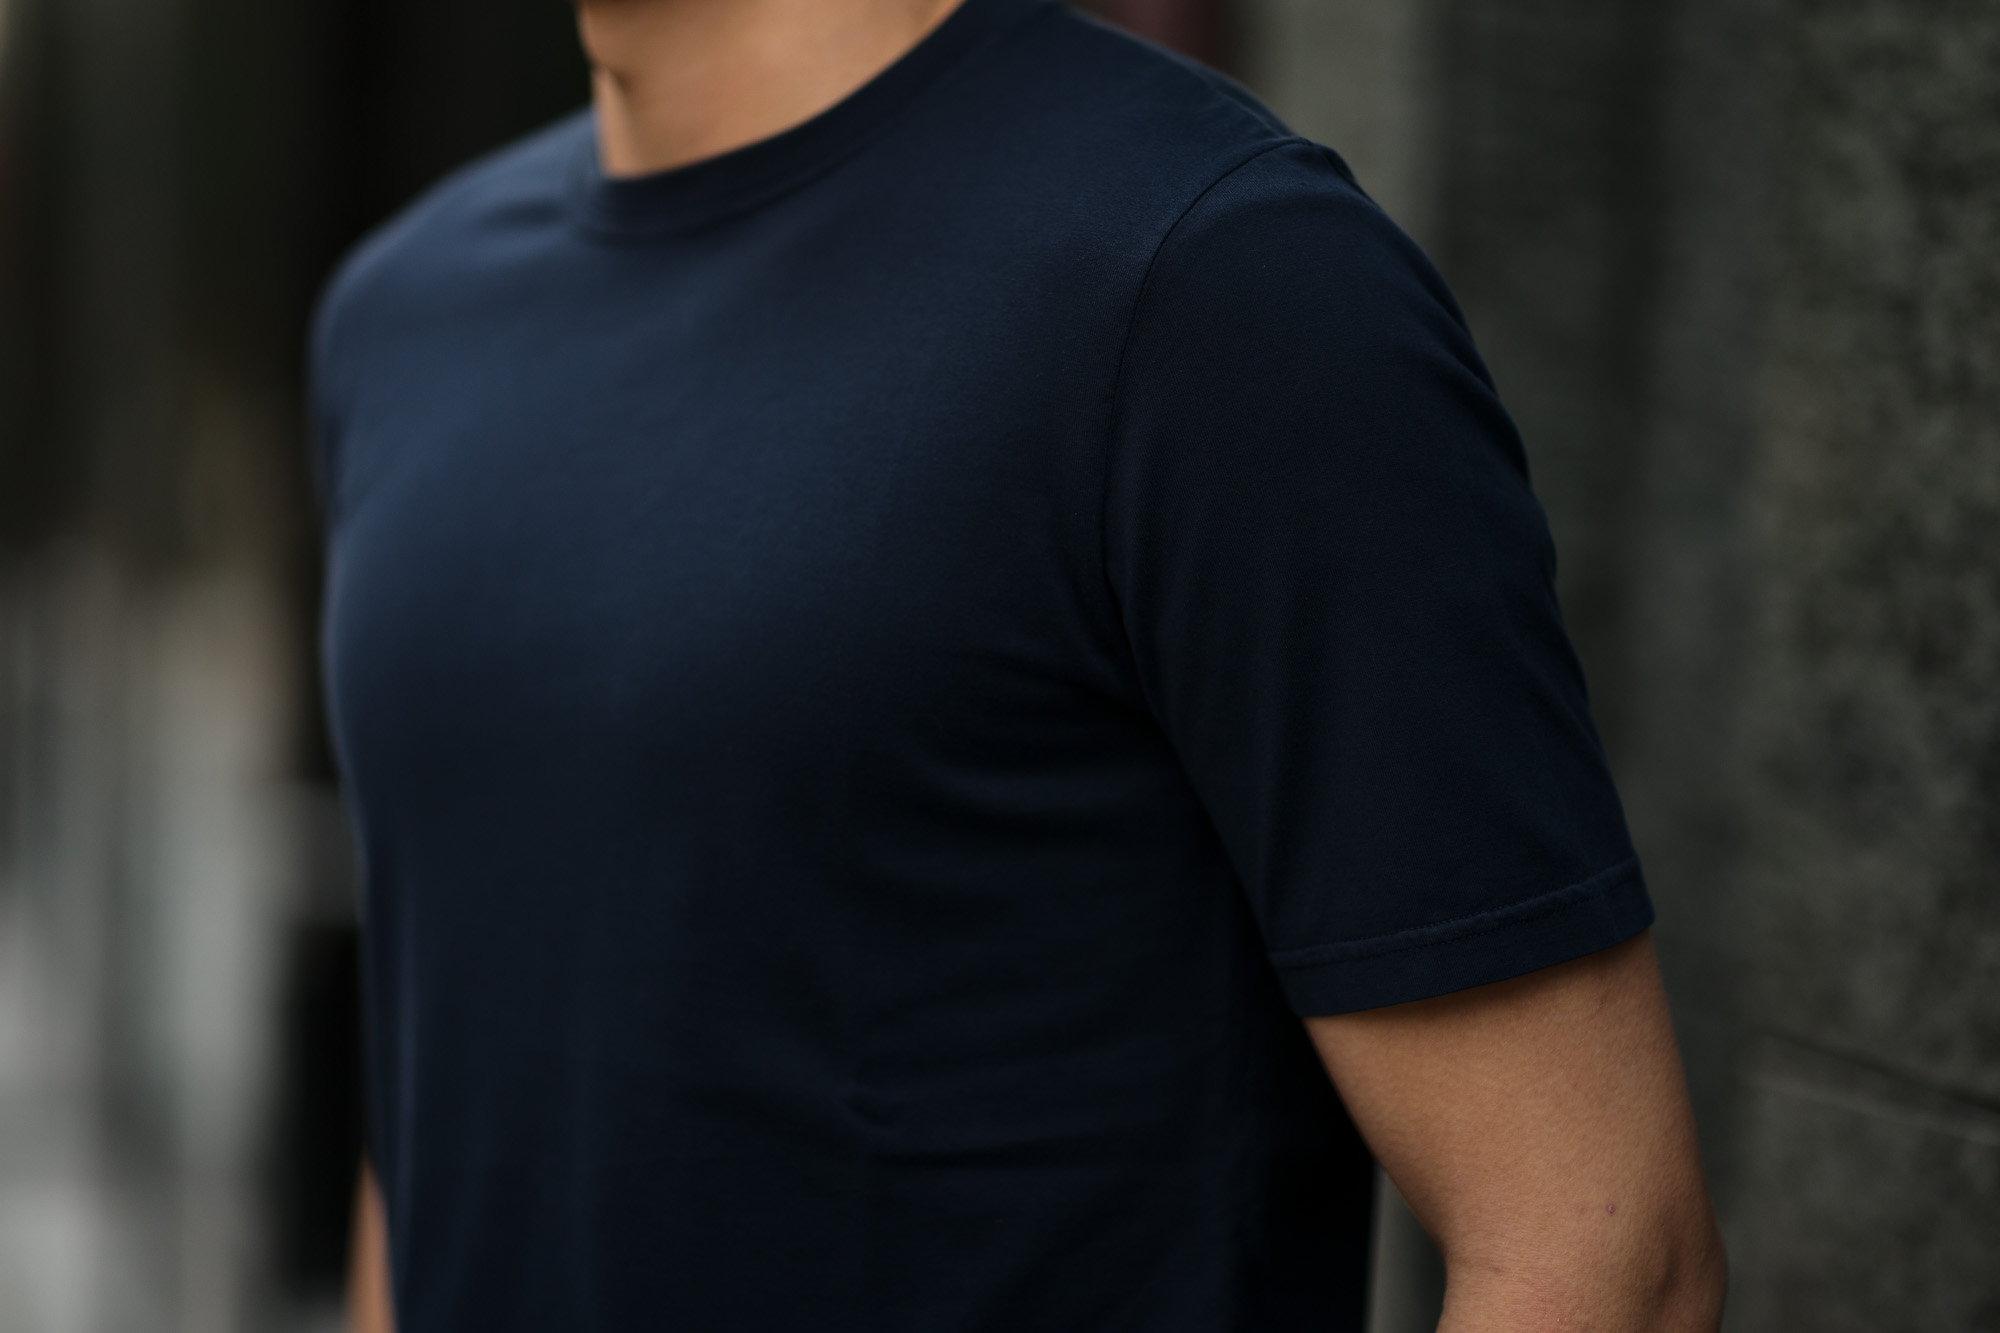 FEDELI(フェデーリ) Crew Neck T-shirt (クルーネック Tシャツ) ギザコットン Tシャツ NAVY (ネイビー・626) made in italy (イタリア製) 2020 春夏 【ご予約受付中】愛知 名古屋 altoediritto アルトエデリット TEE